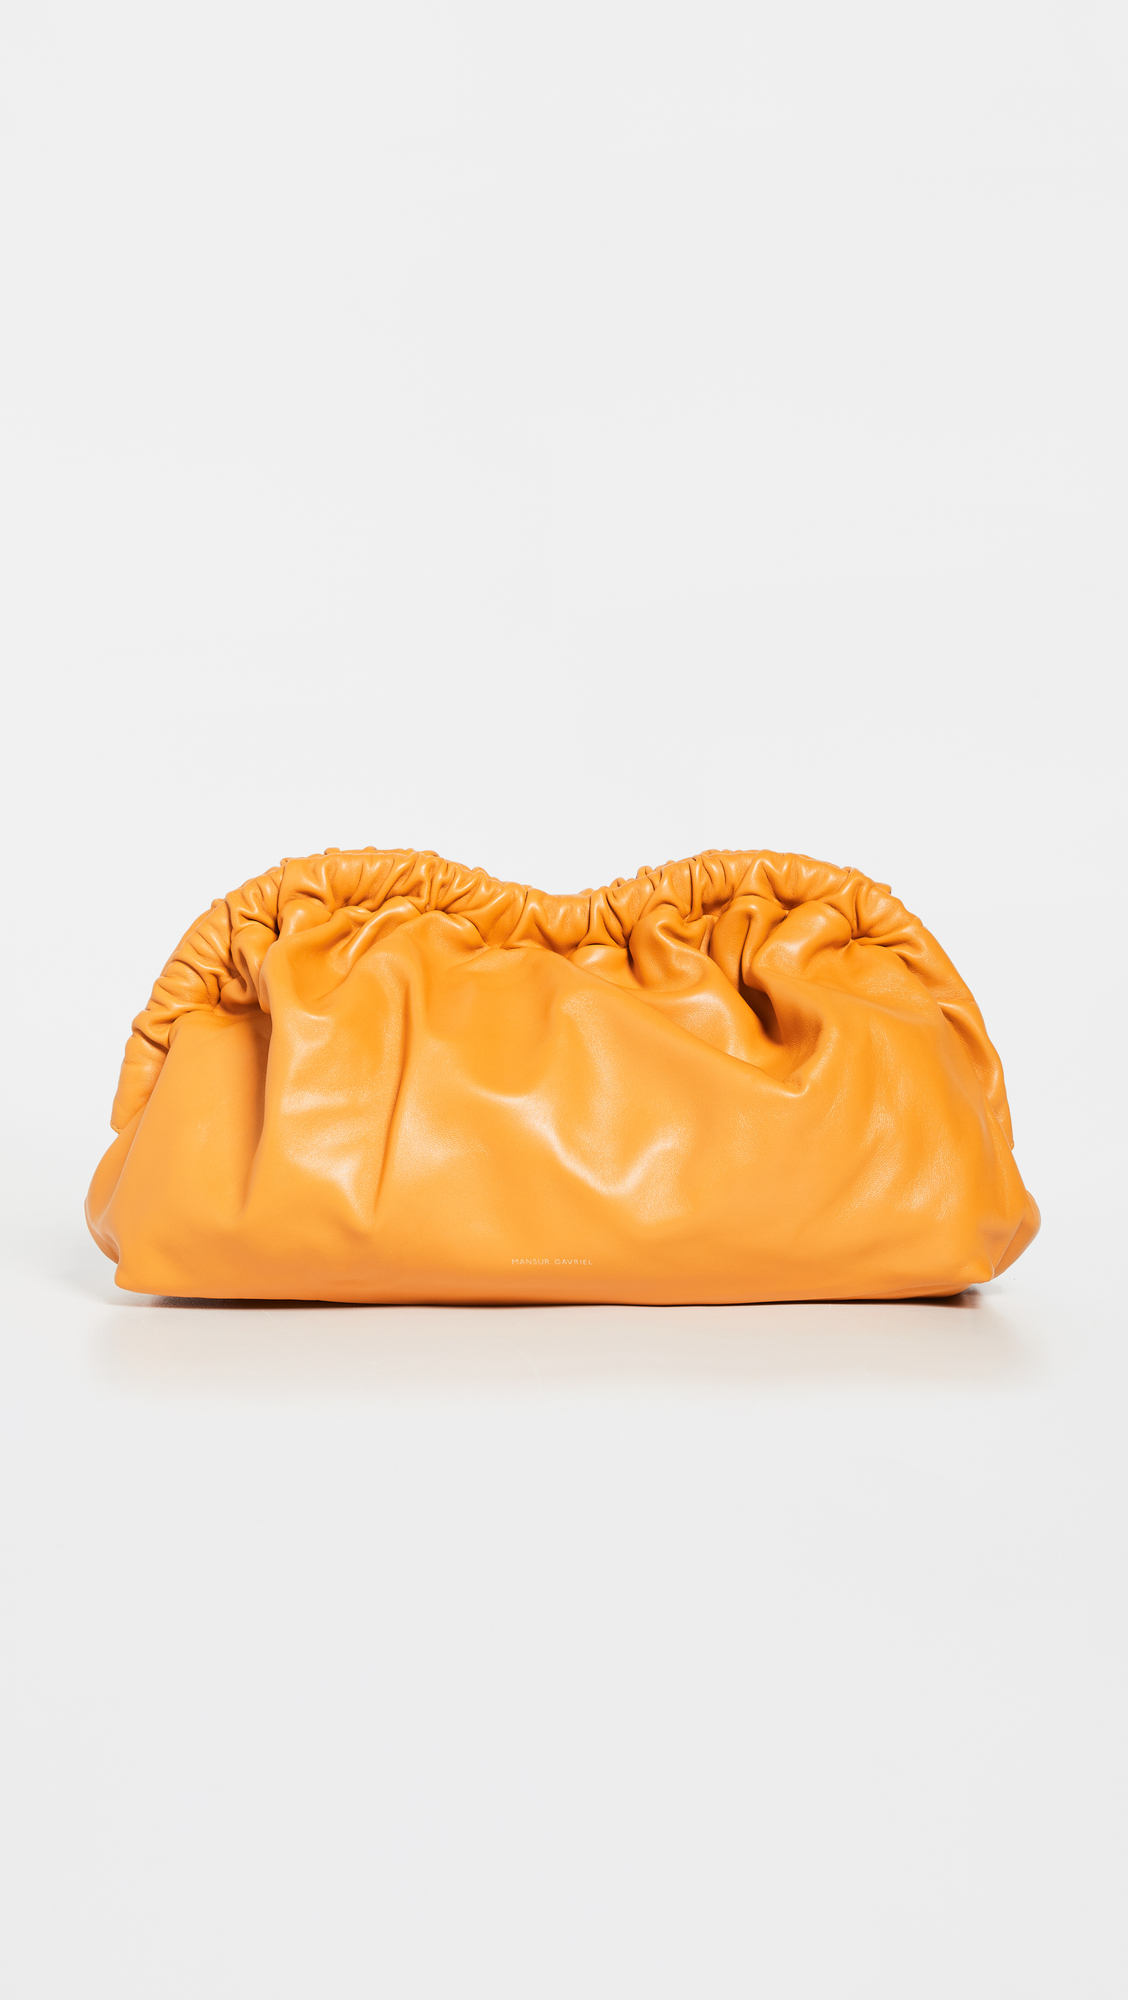 Côte d'Azur Strapped – Designer Clutch Bags